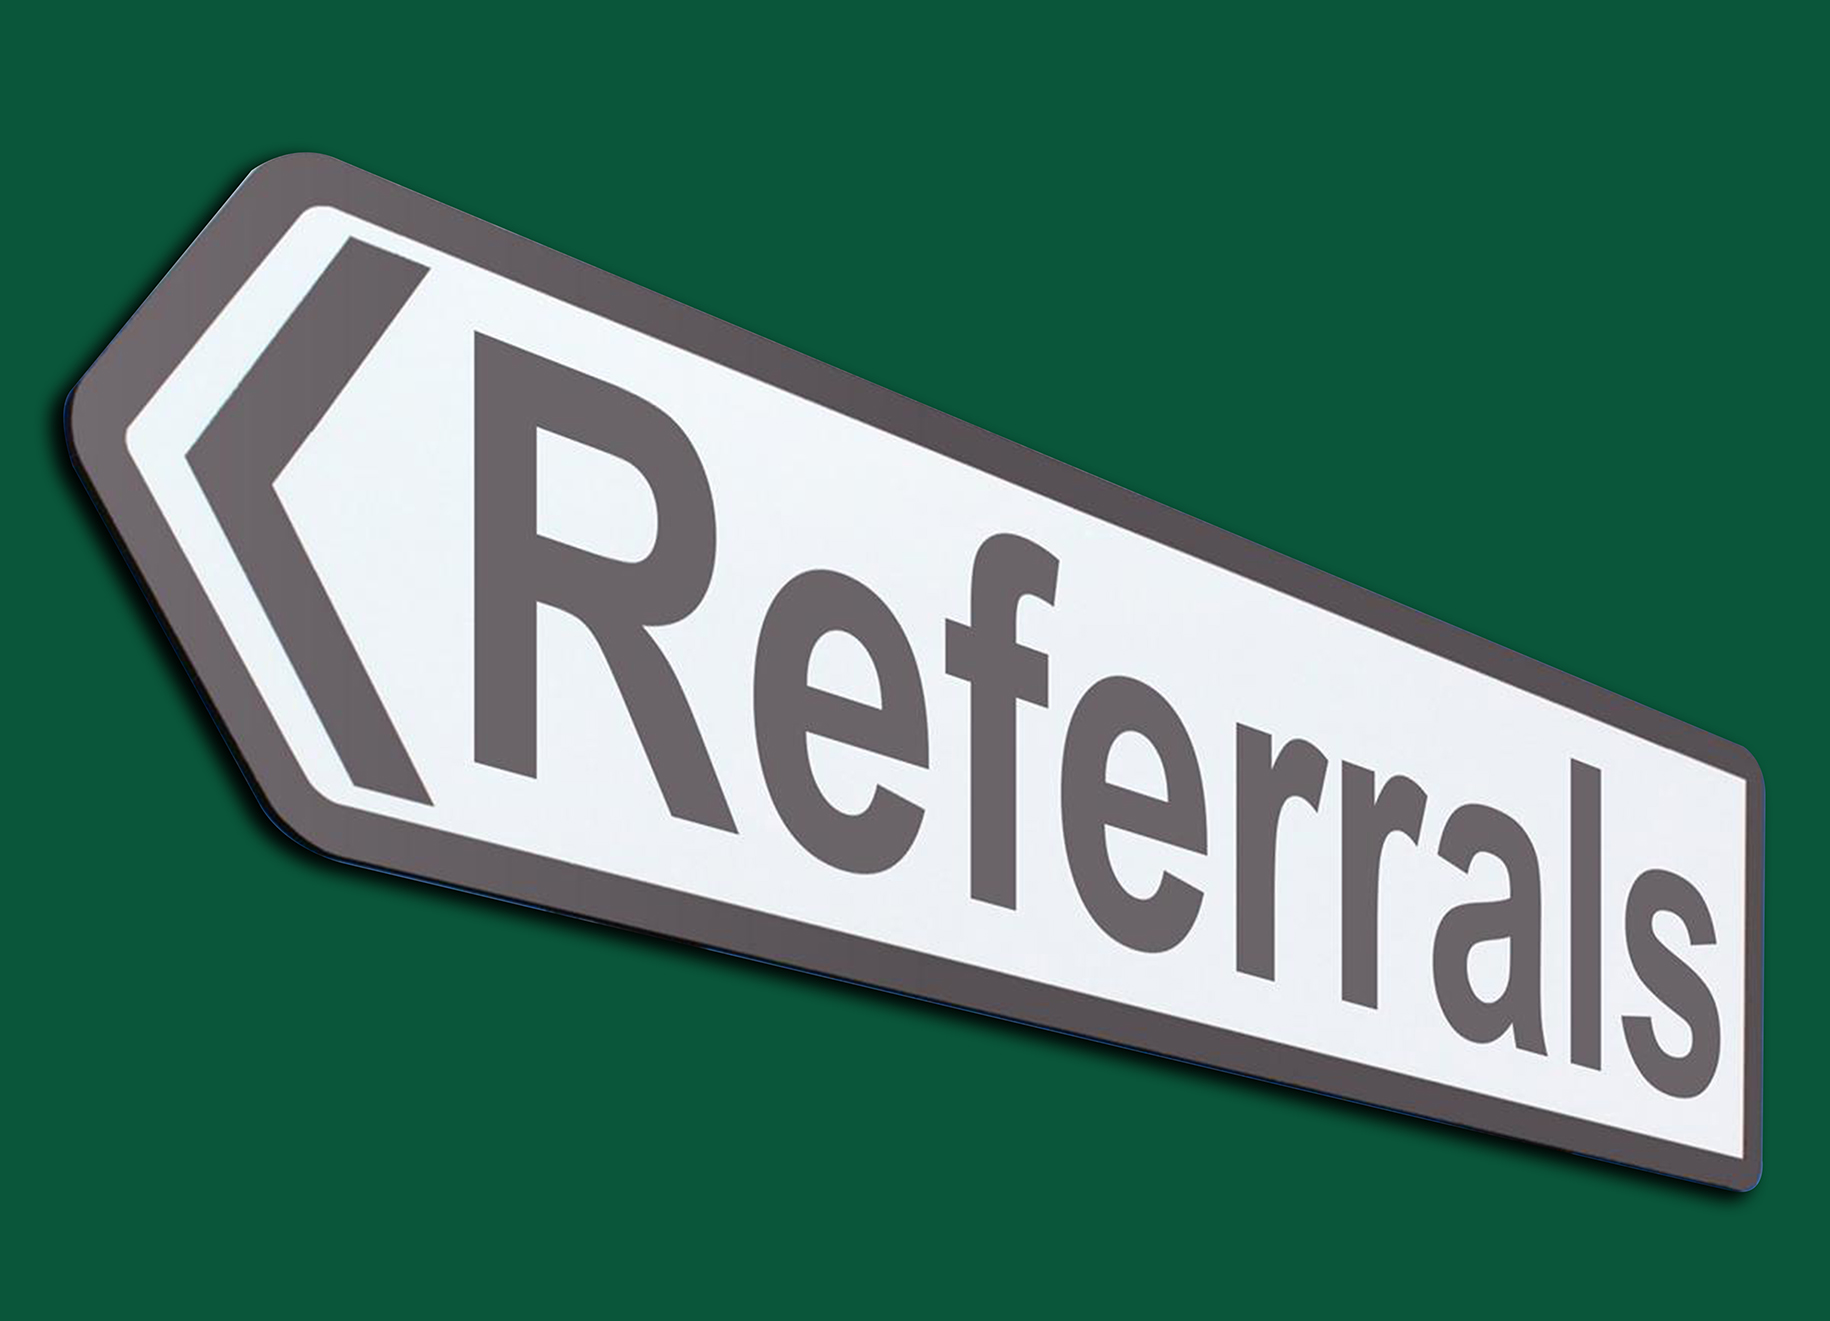 financial marketing referrals